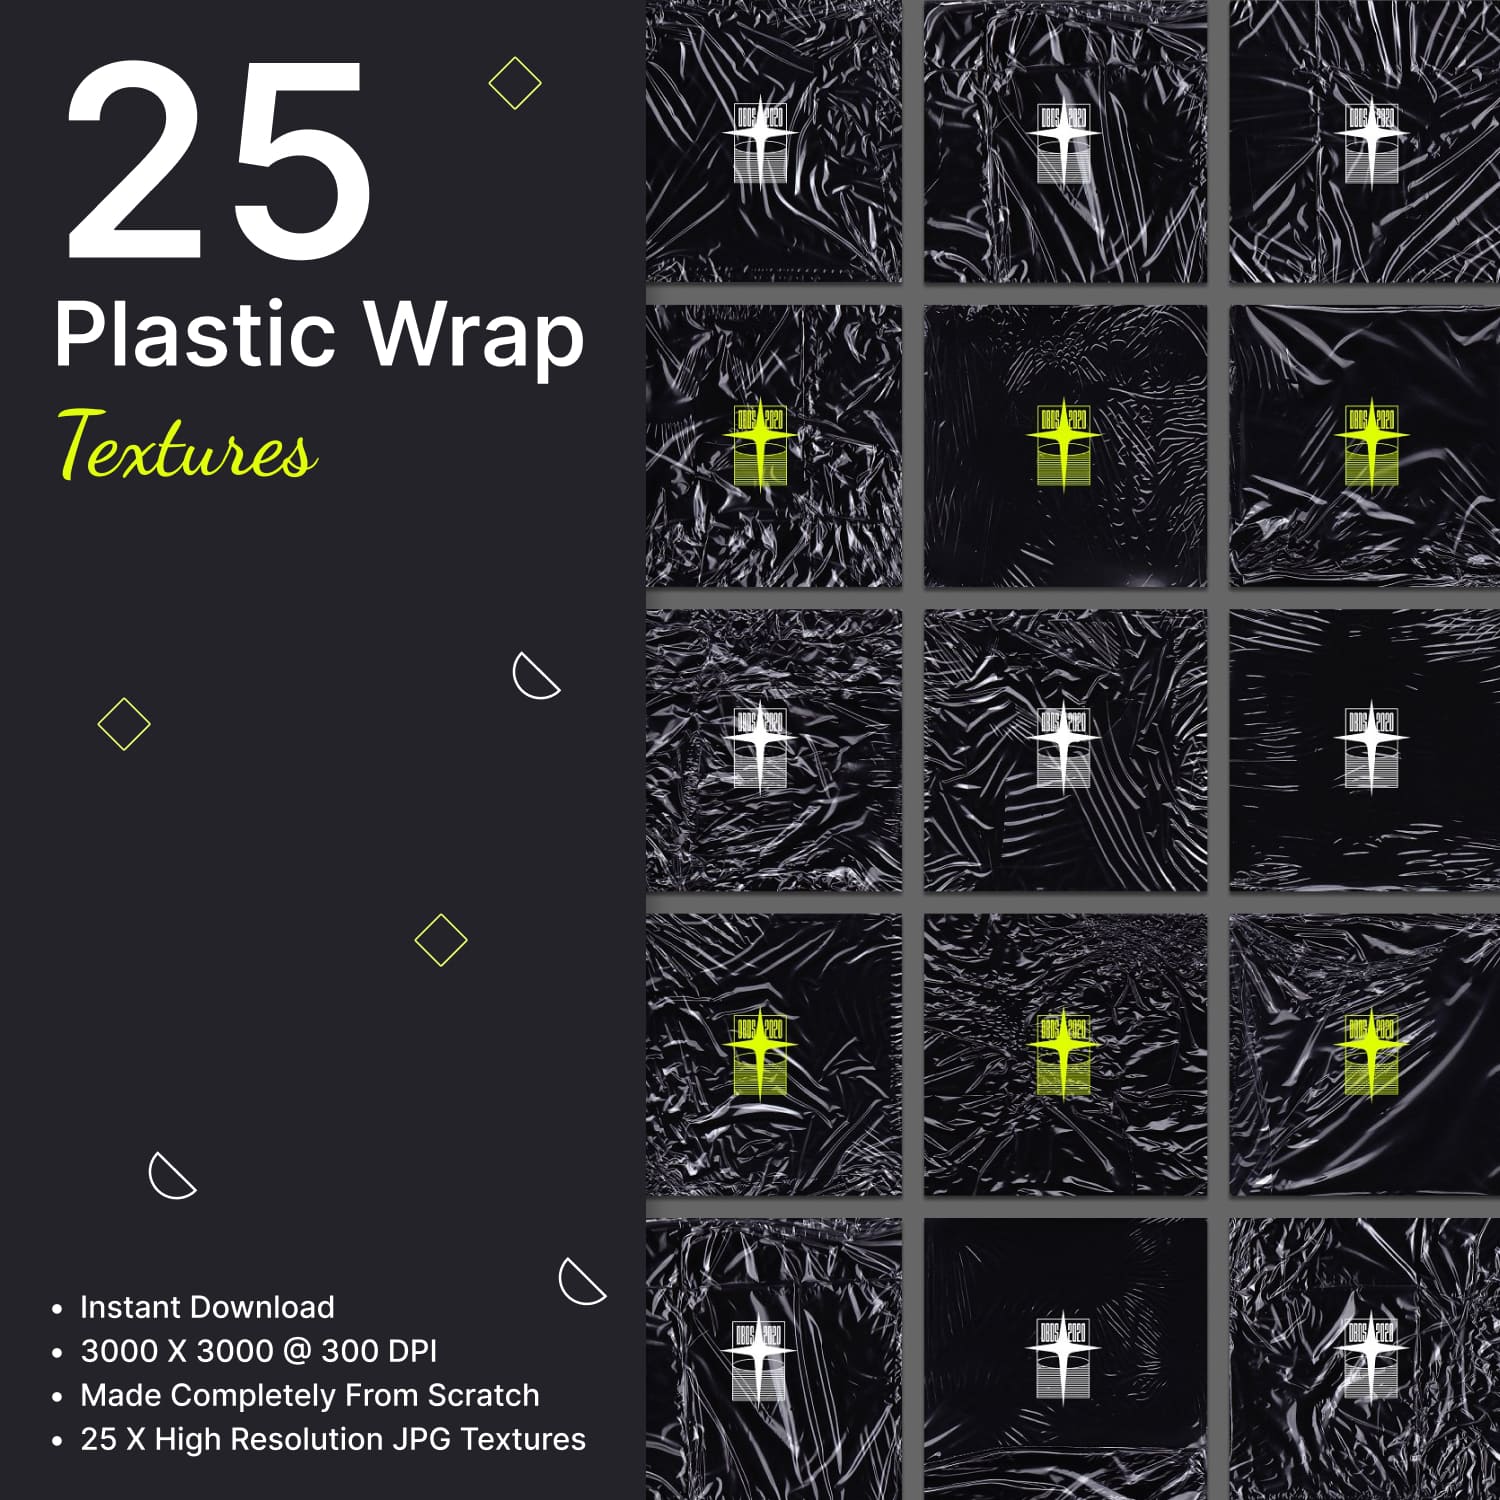 25 plastic wrap textures - main image preview.